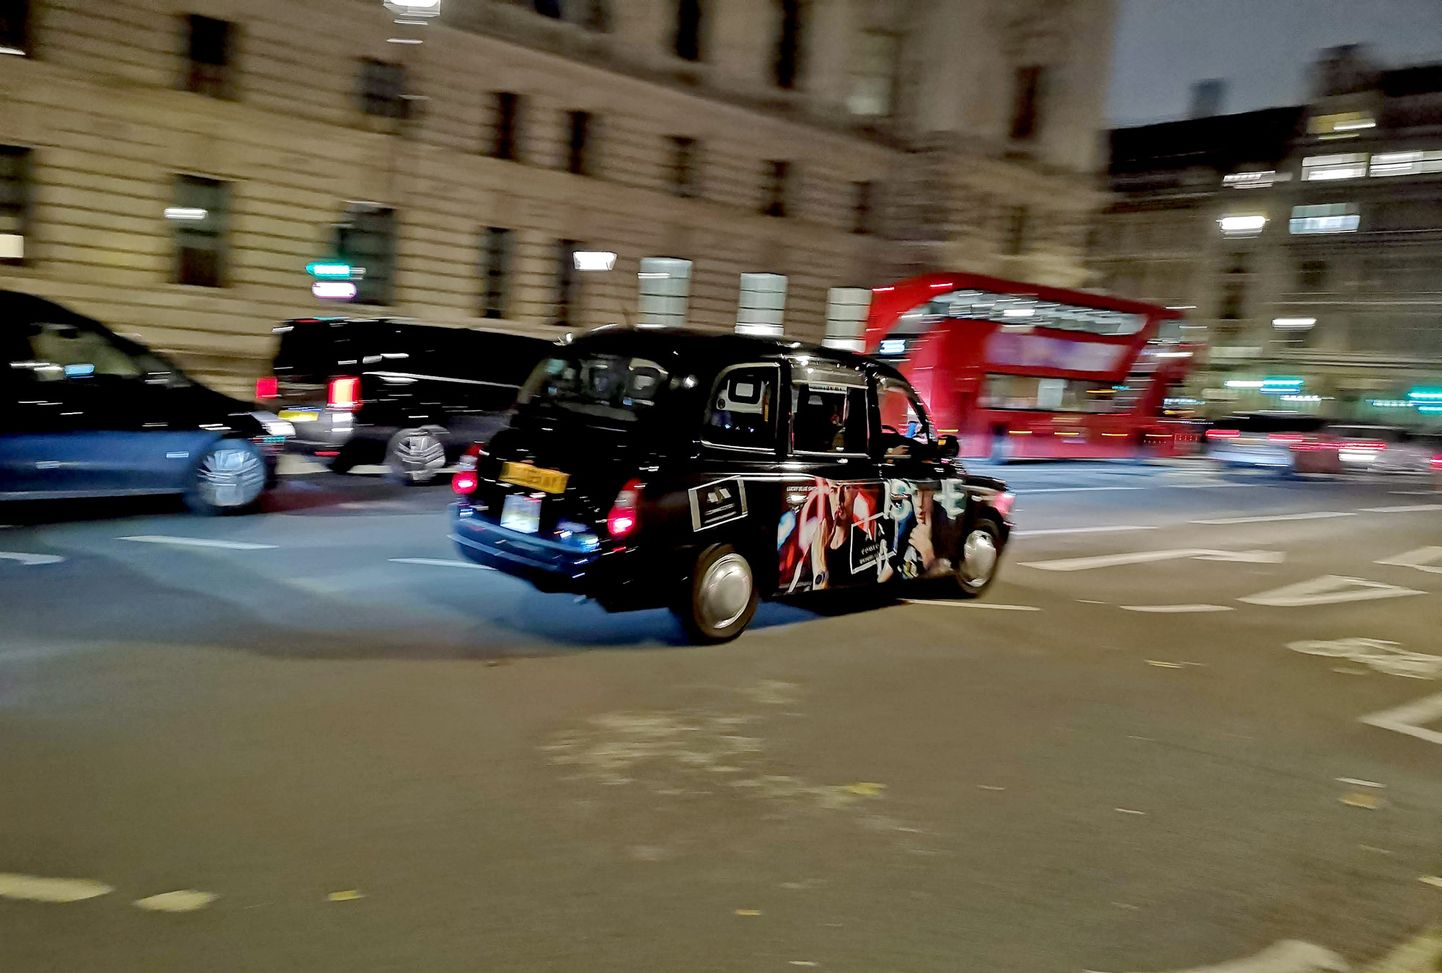 Londonas taksometrs naktī